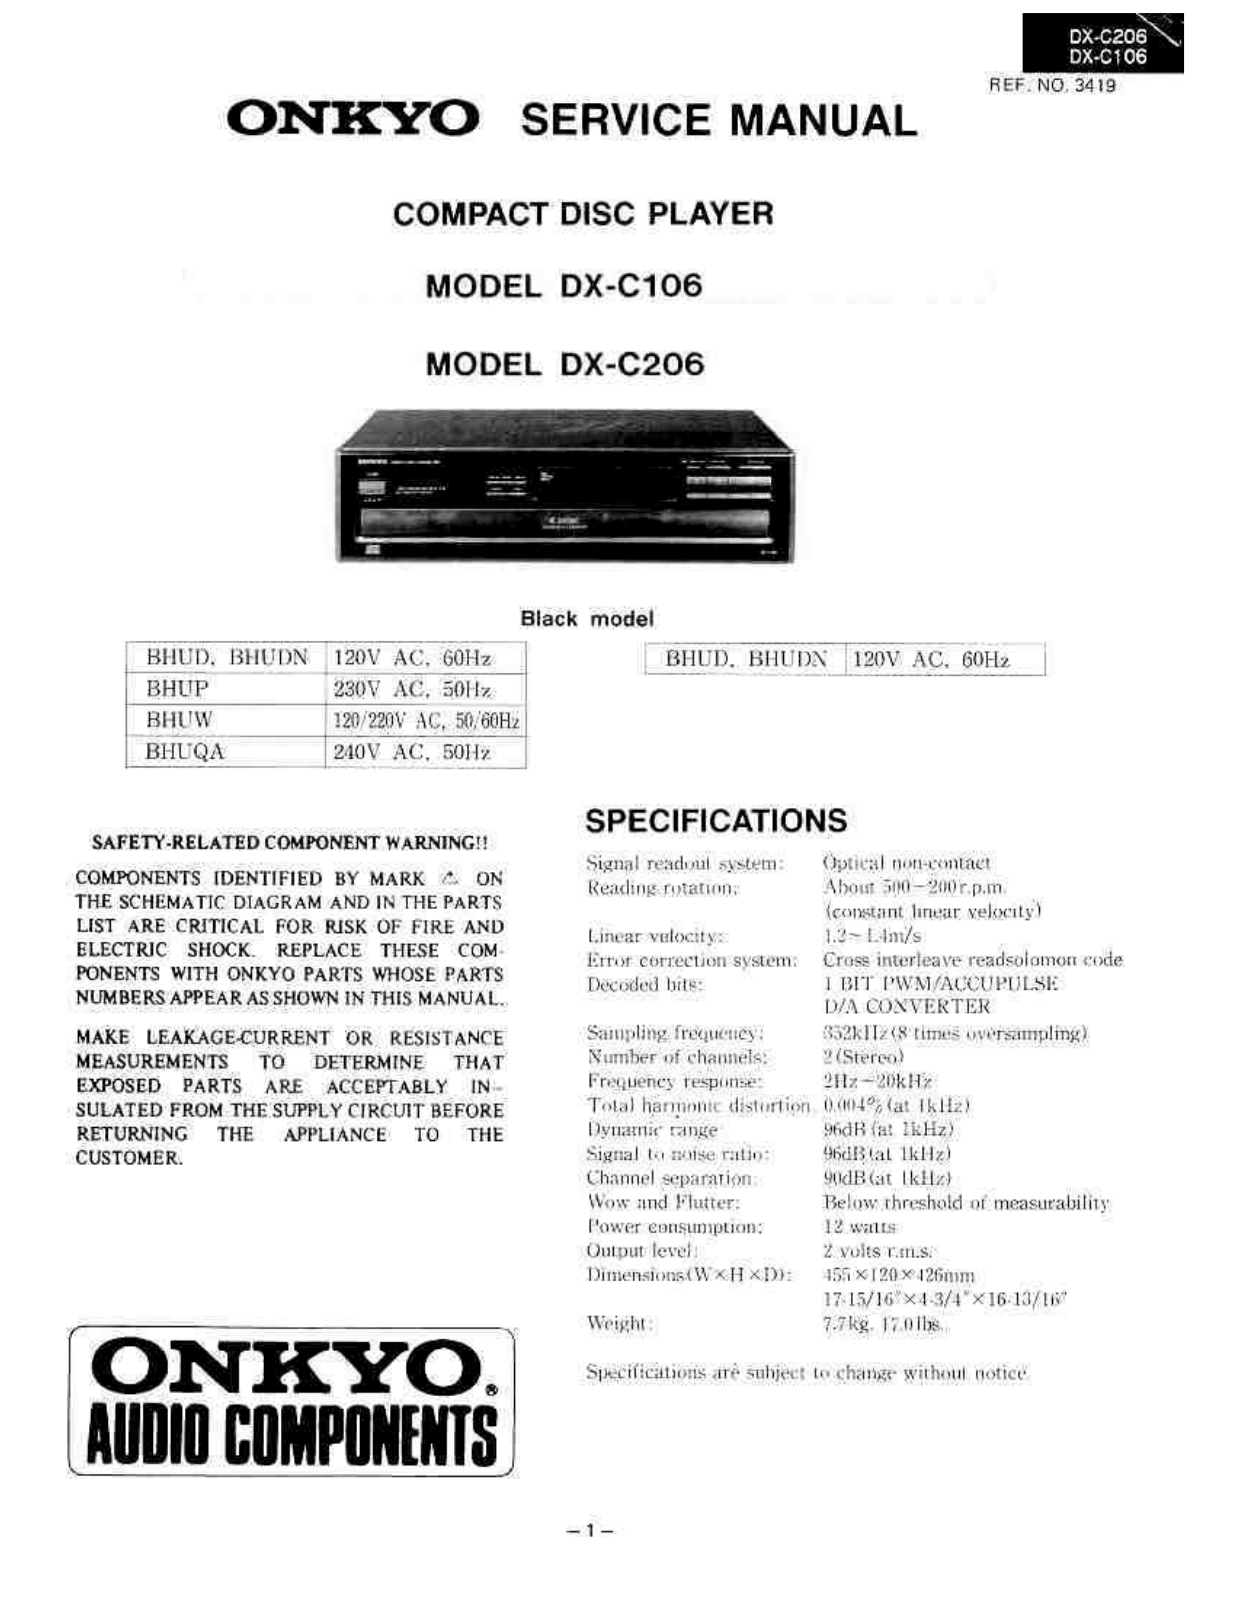 Onkyo DX C106, DX C206 Service Manual